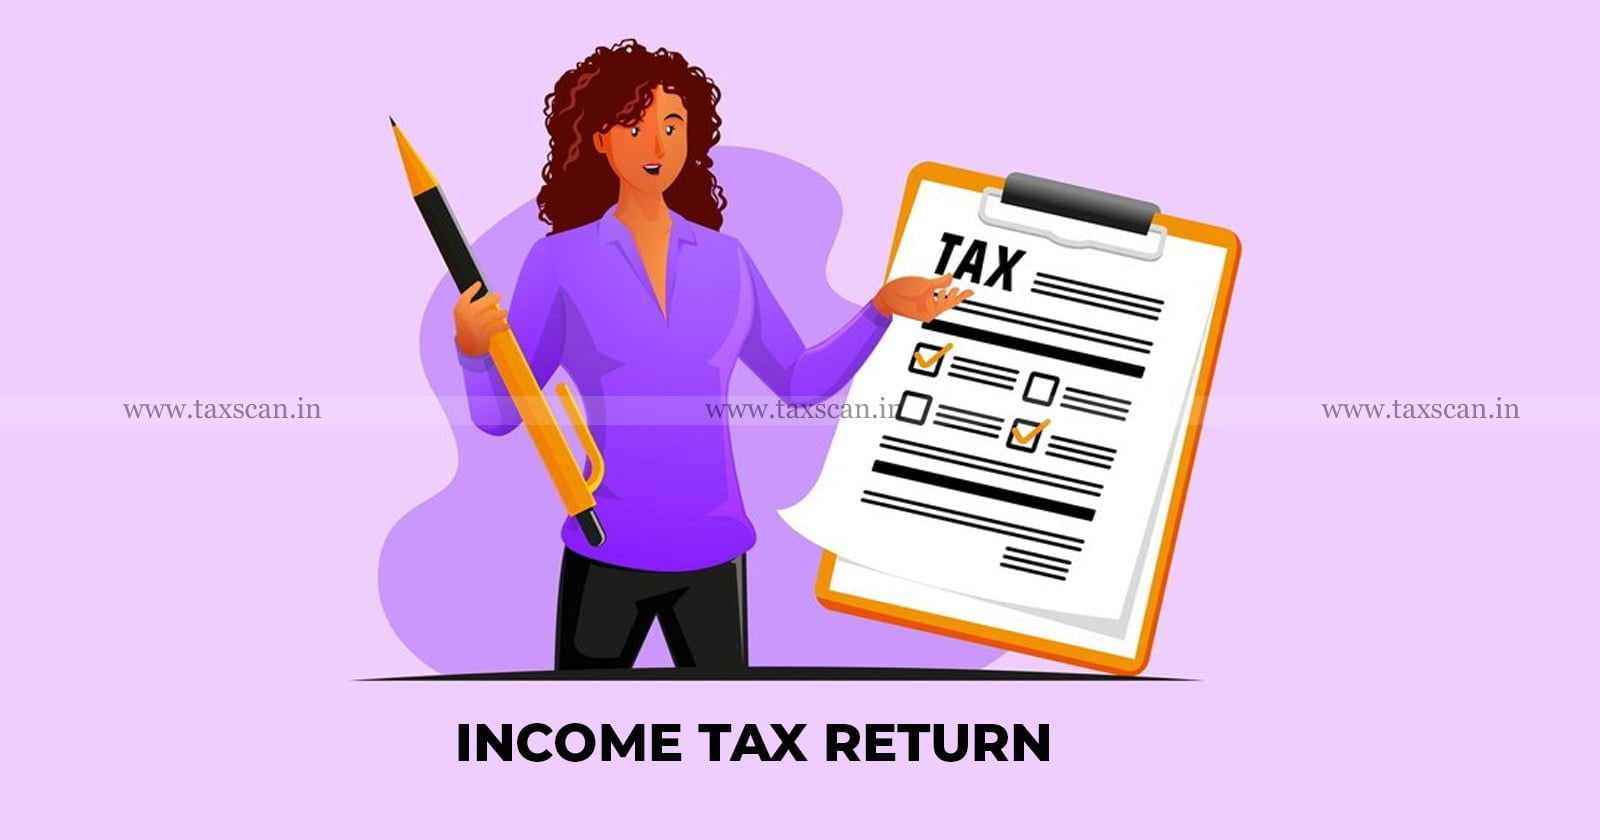 Filing of Income Tax Return - Income Tax Return - Income Tax - Due Date - Mandatory - Claim Benefit - ITAT - taxscan